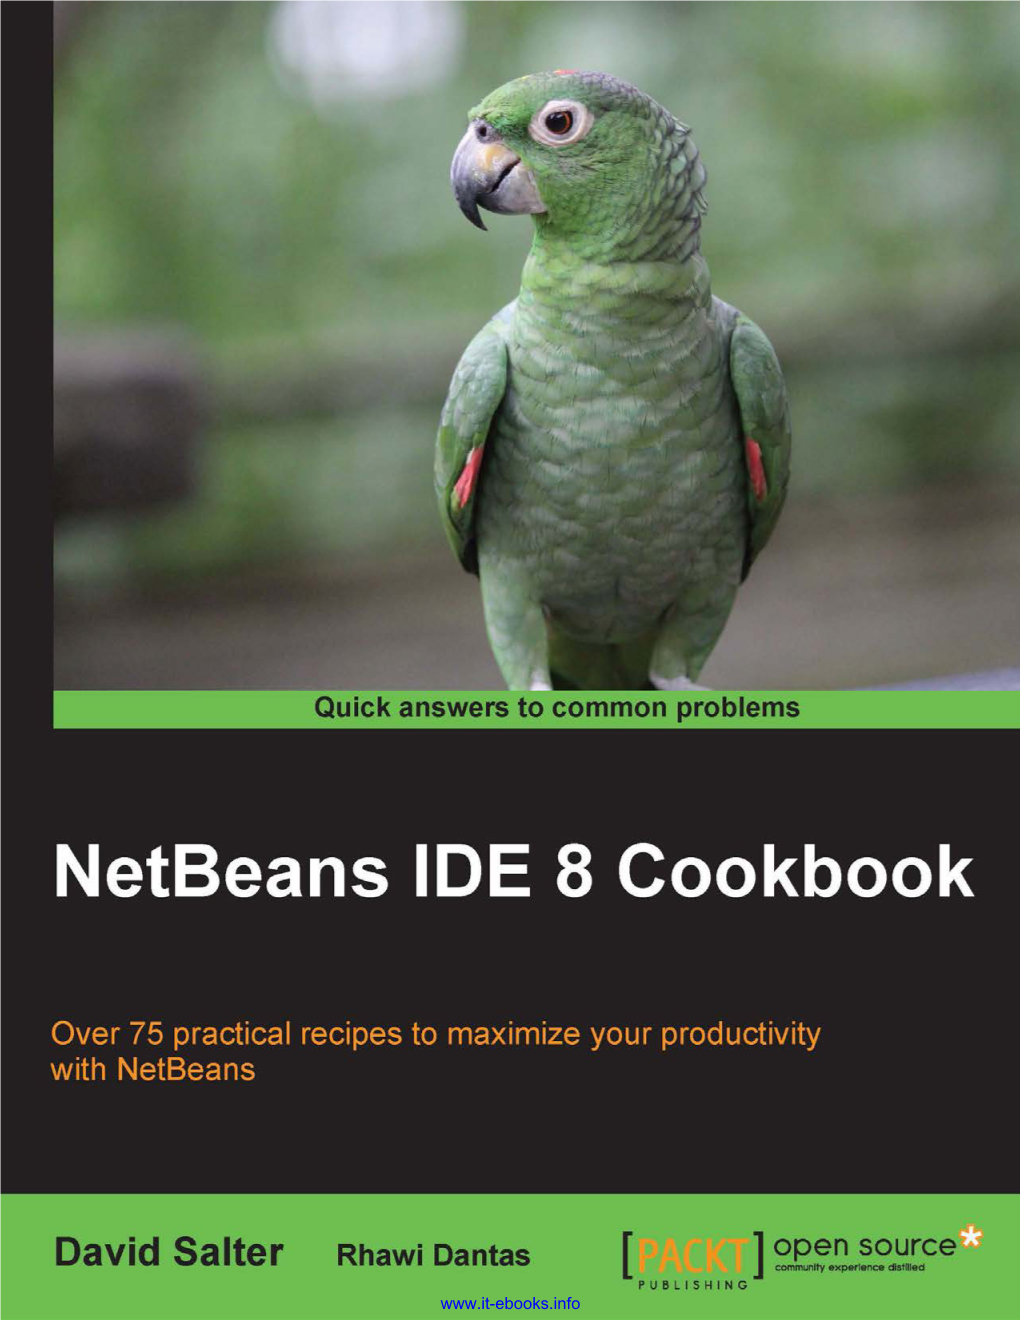 Netbeans IDE 8 Cookbook